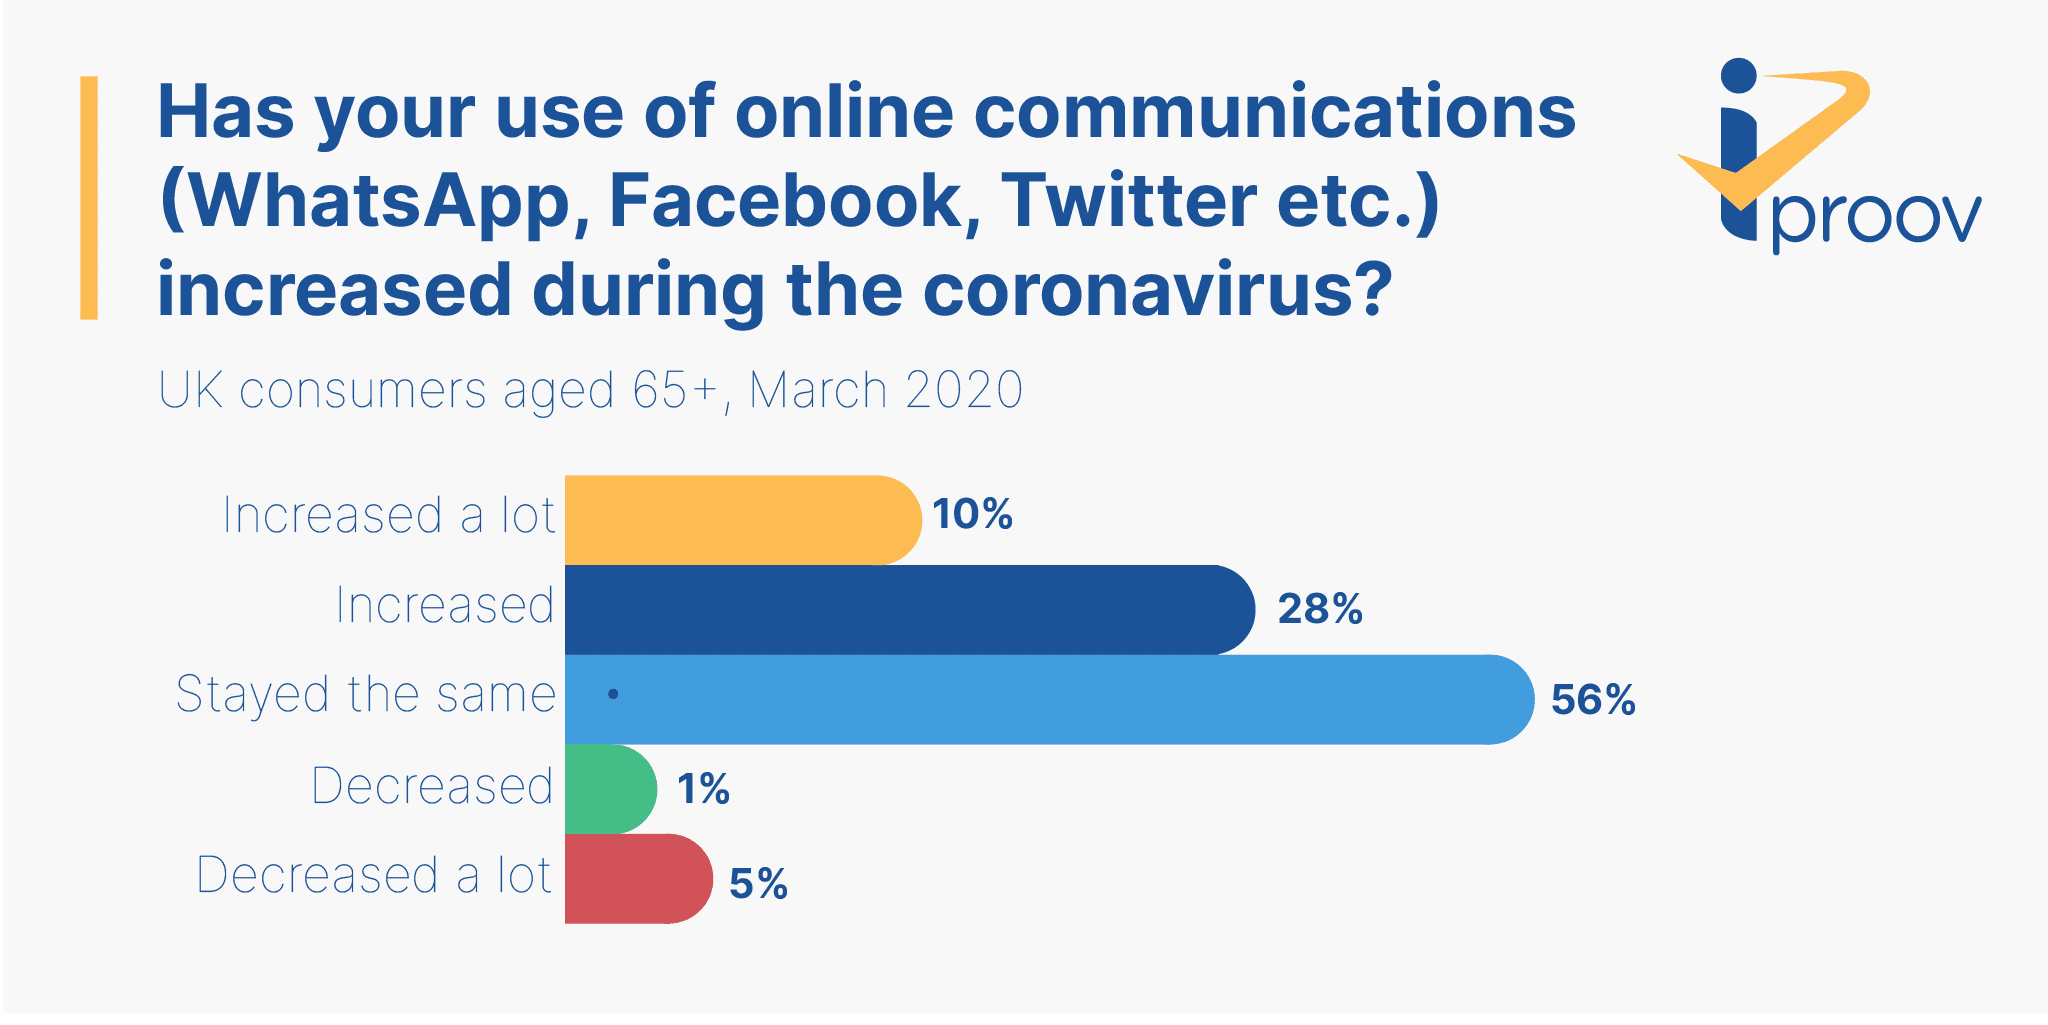 increased use of online communications during coronavirus